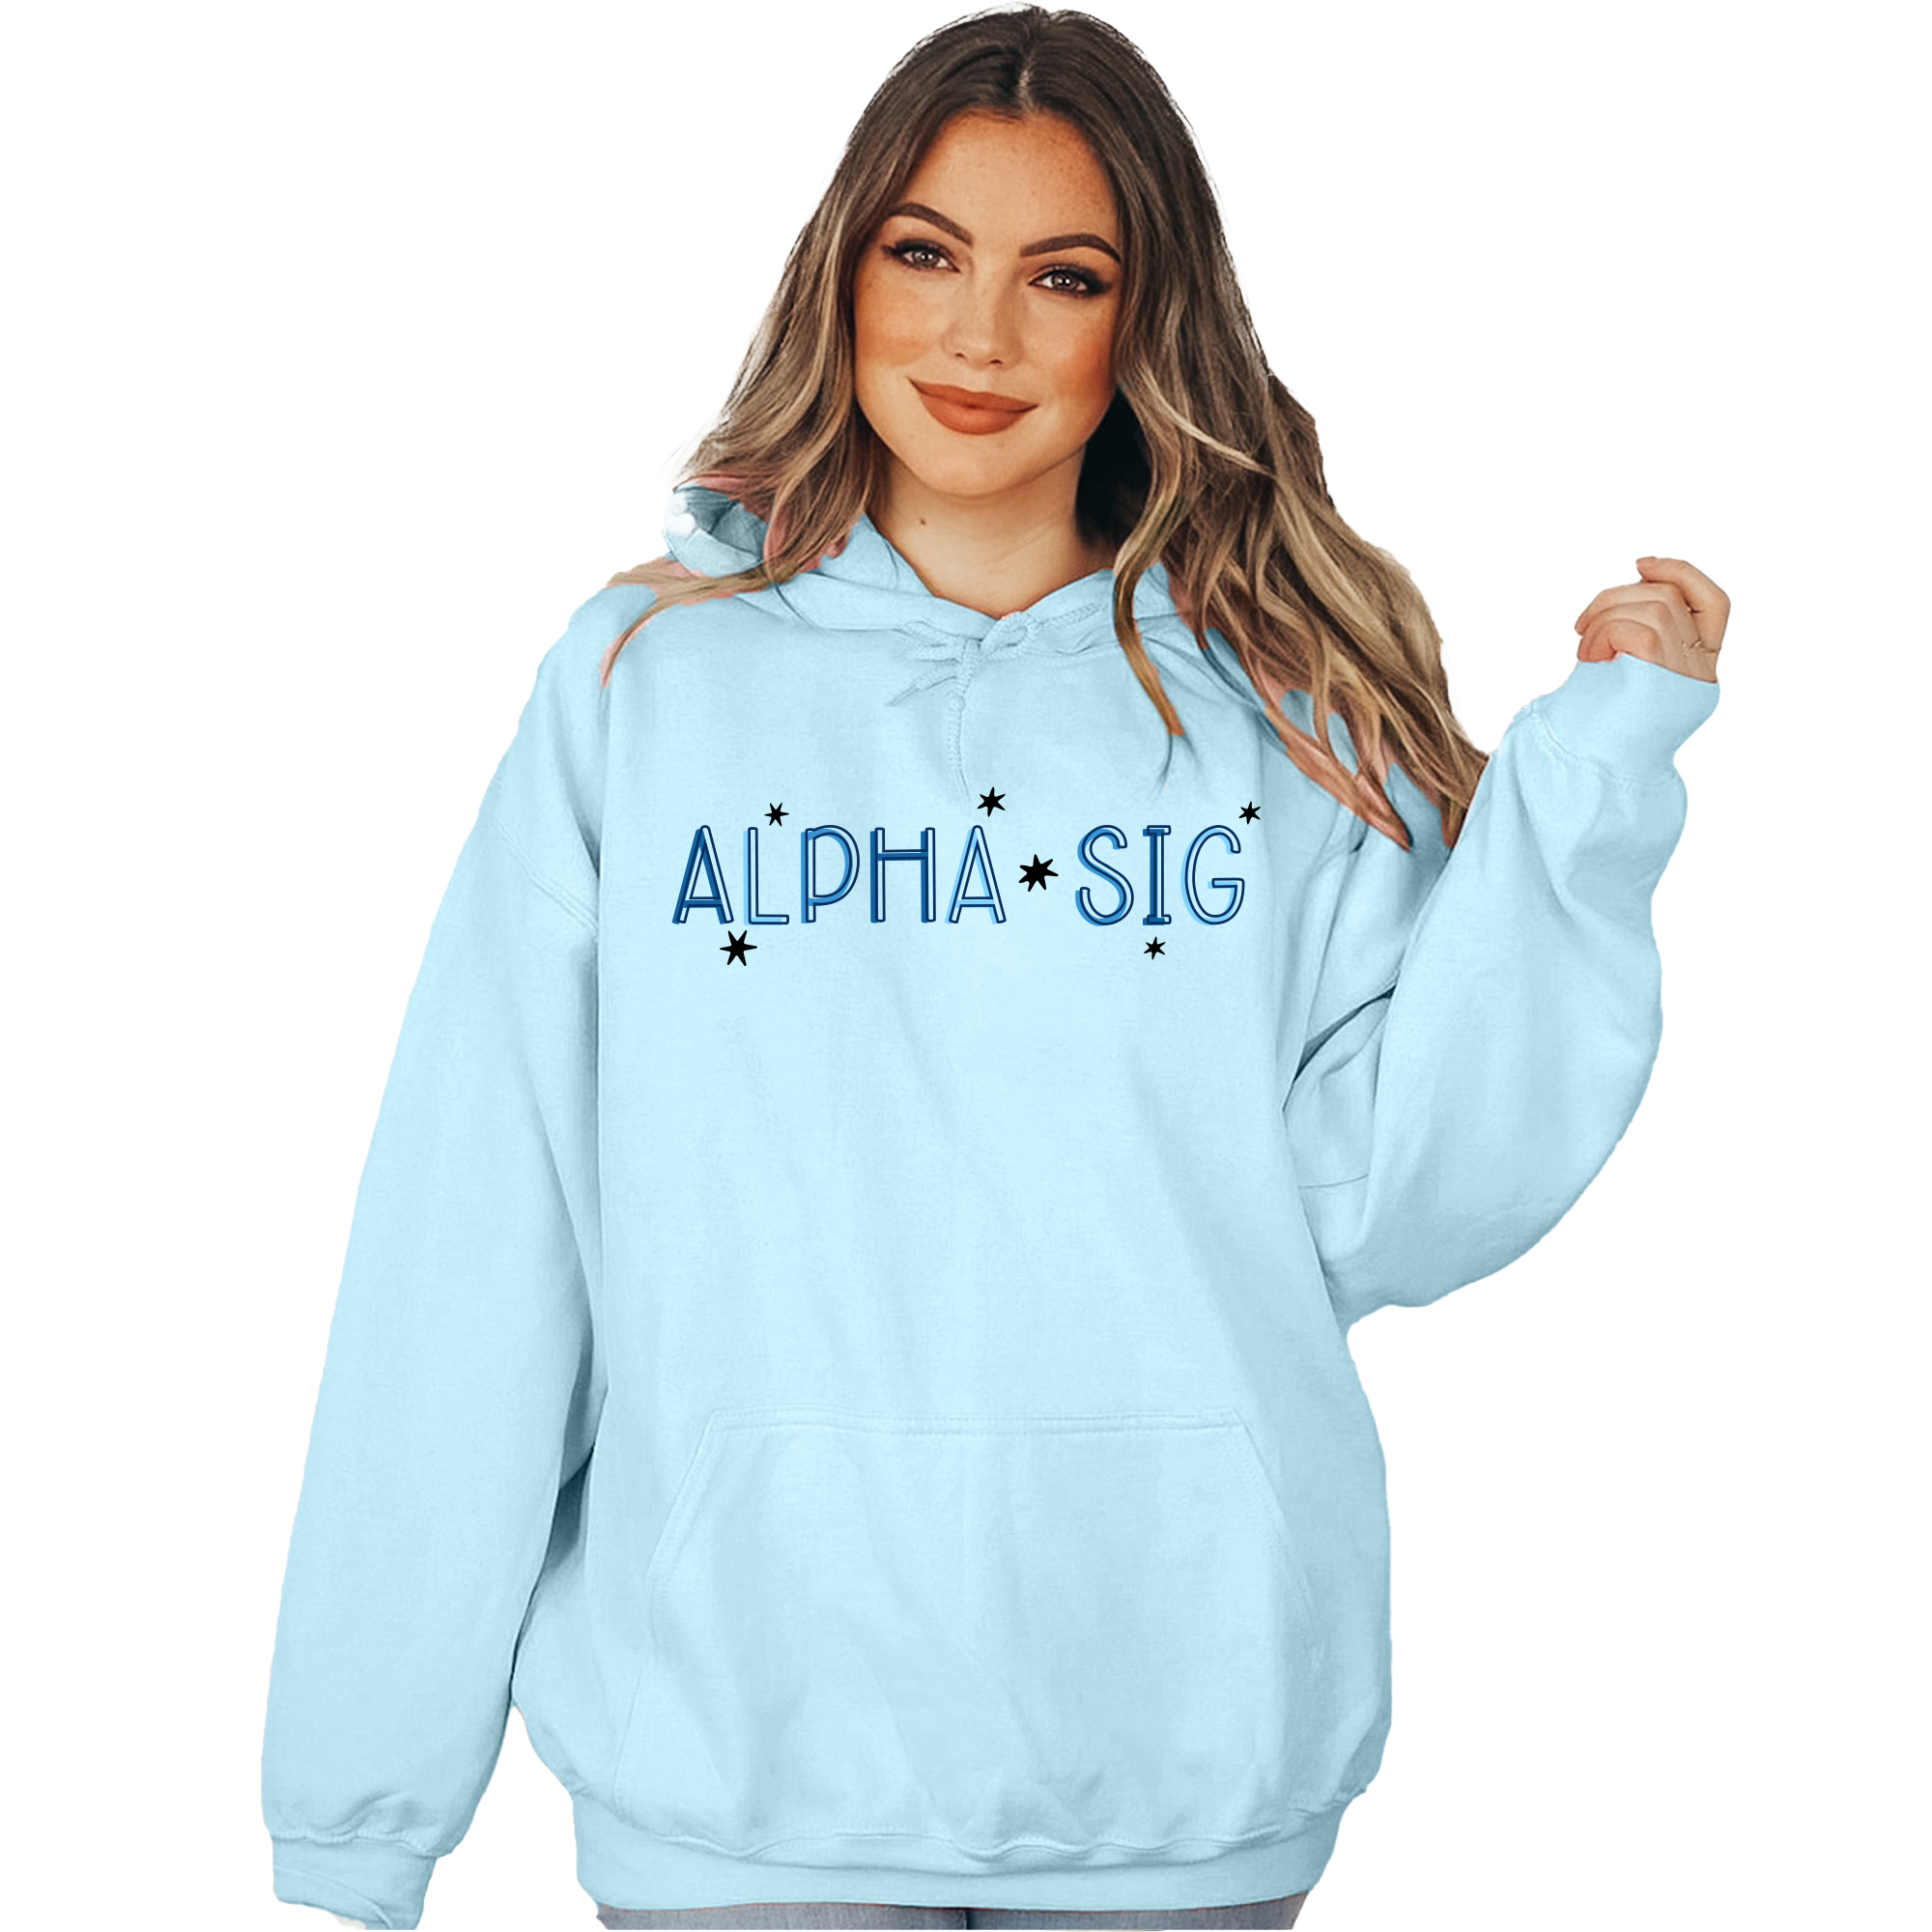 Alpha Sigma Alpha Hoodie - Sparkle, Blue Hoodie, Greek Apparel, Big Little Reveal, Initiation - Go Greek Chic